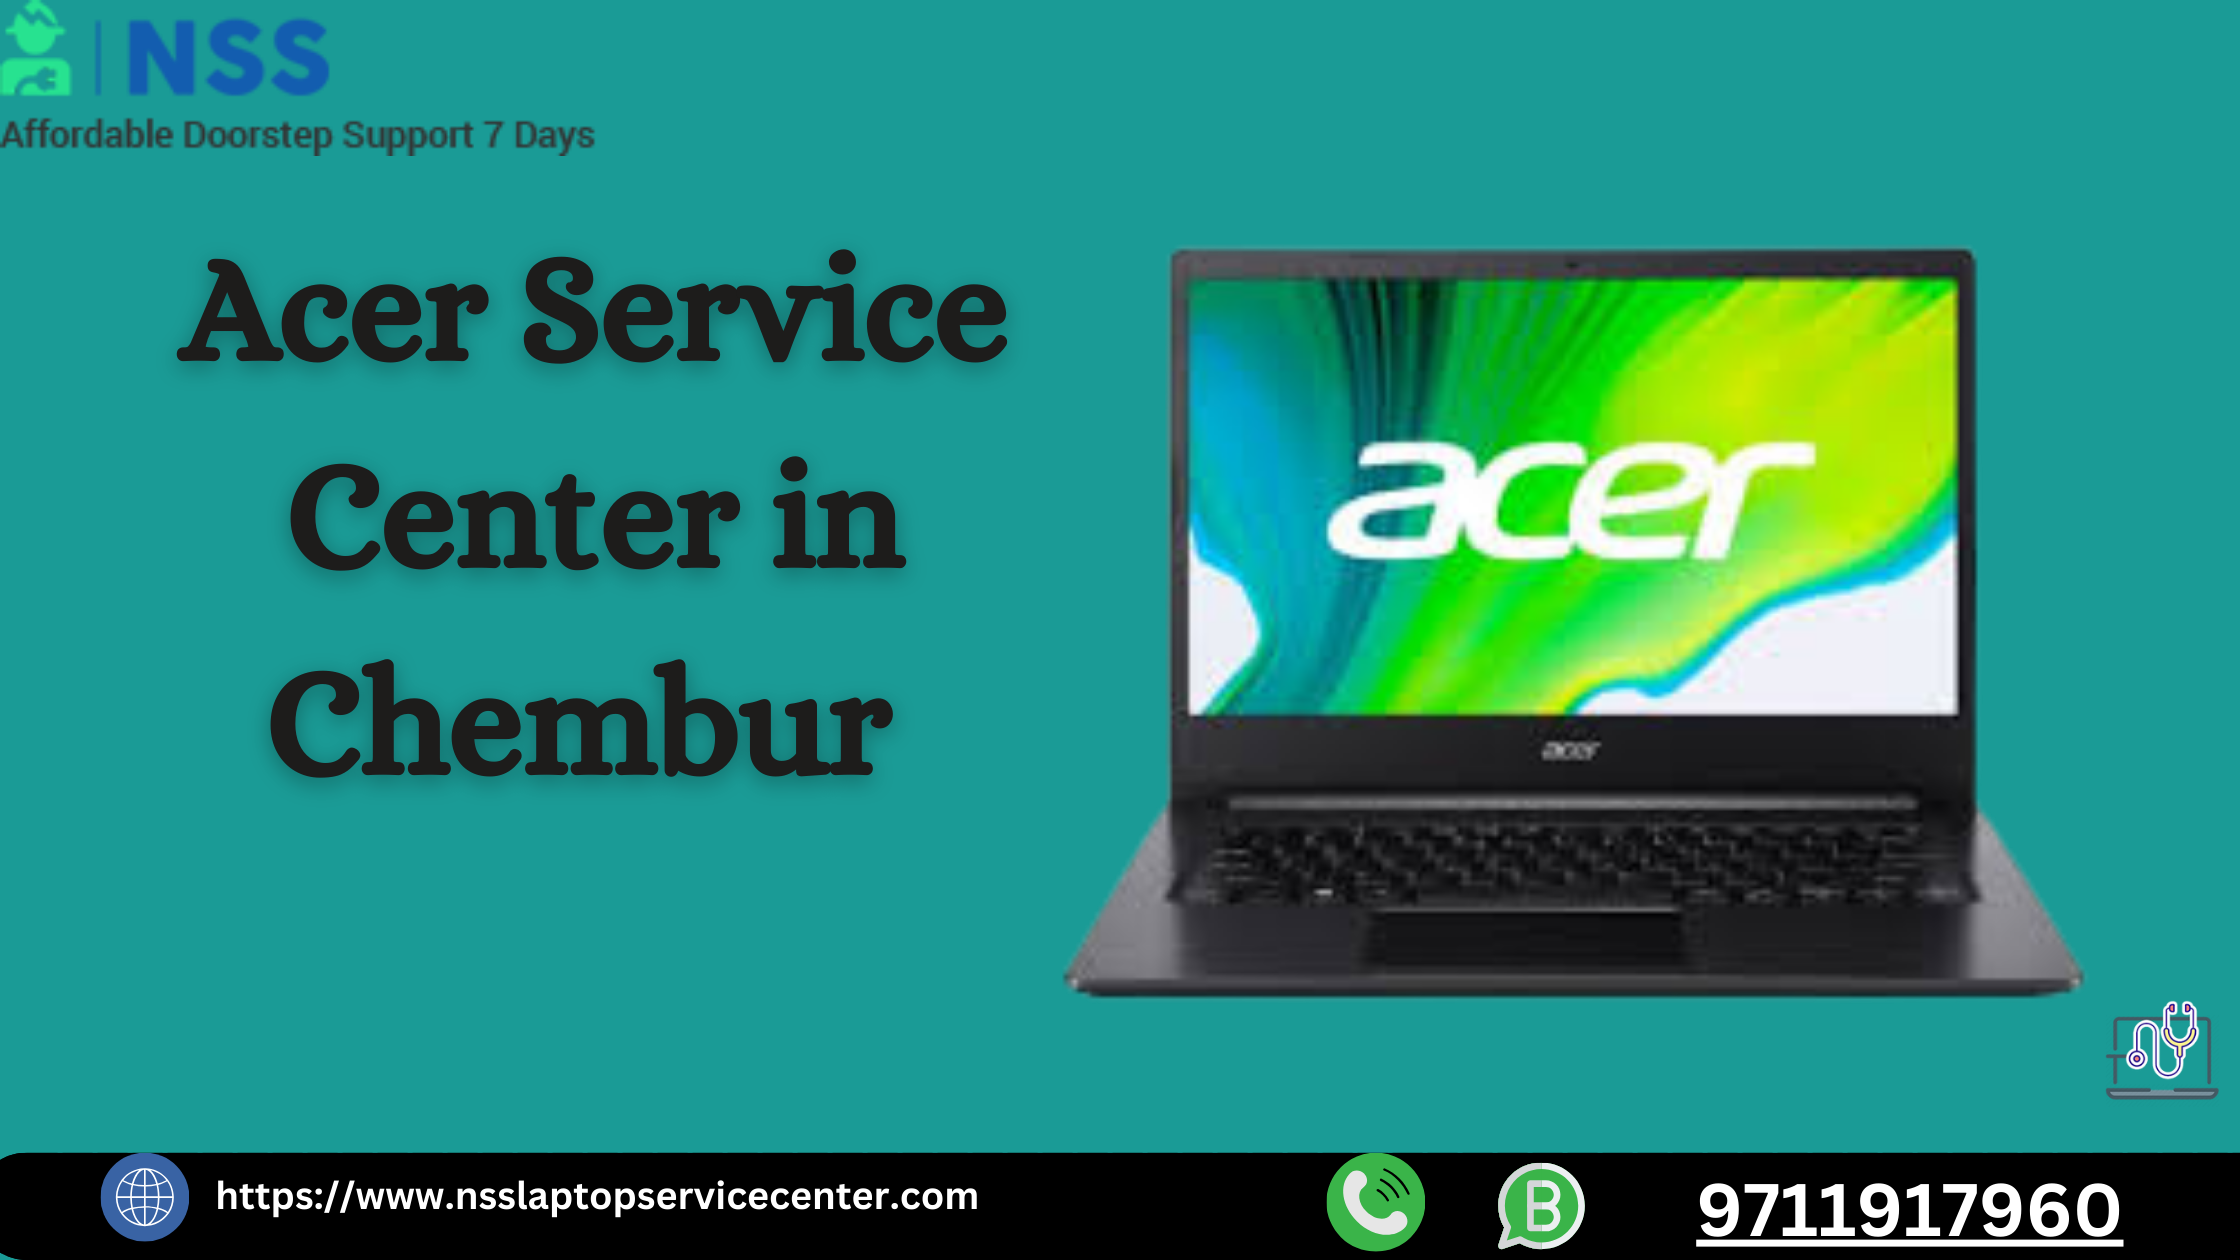 Acer Service Center in Chembur Near Mumbai